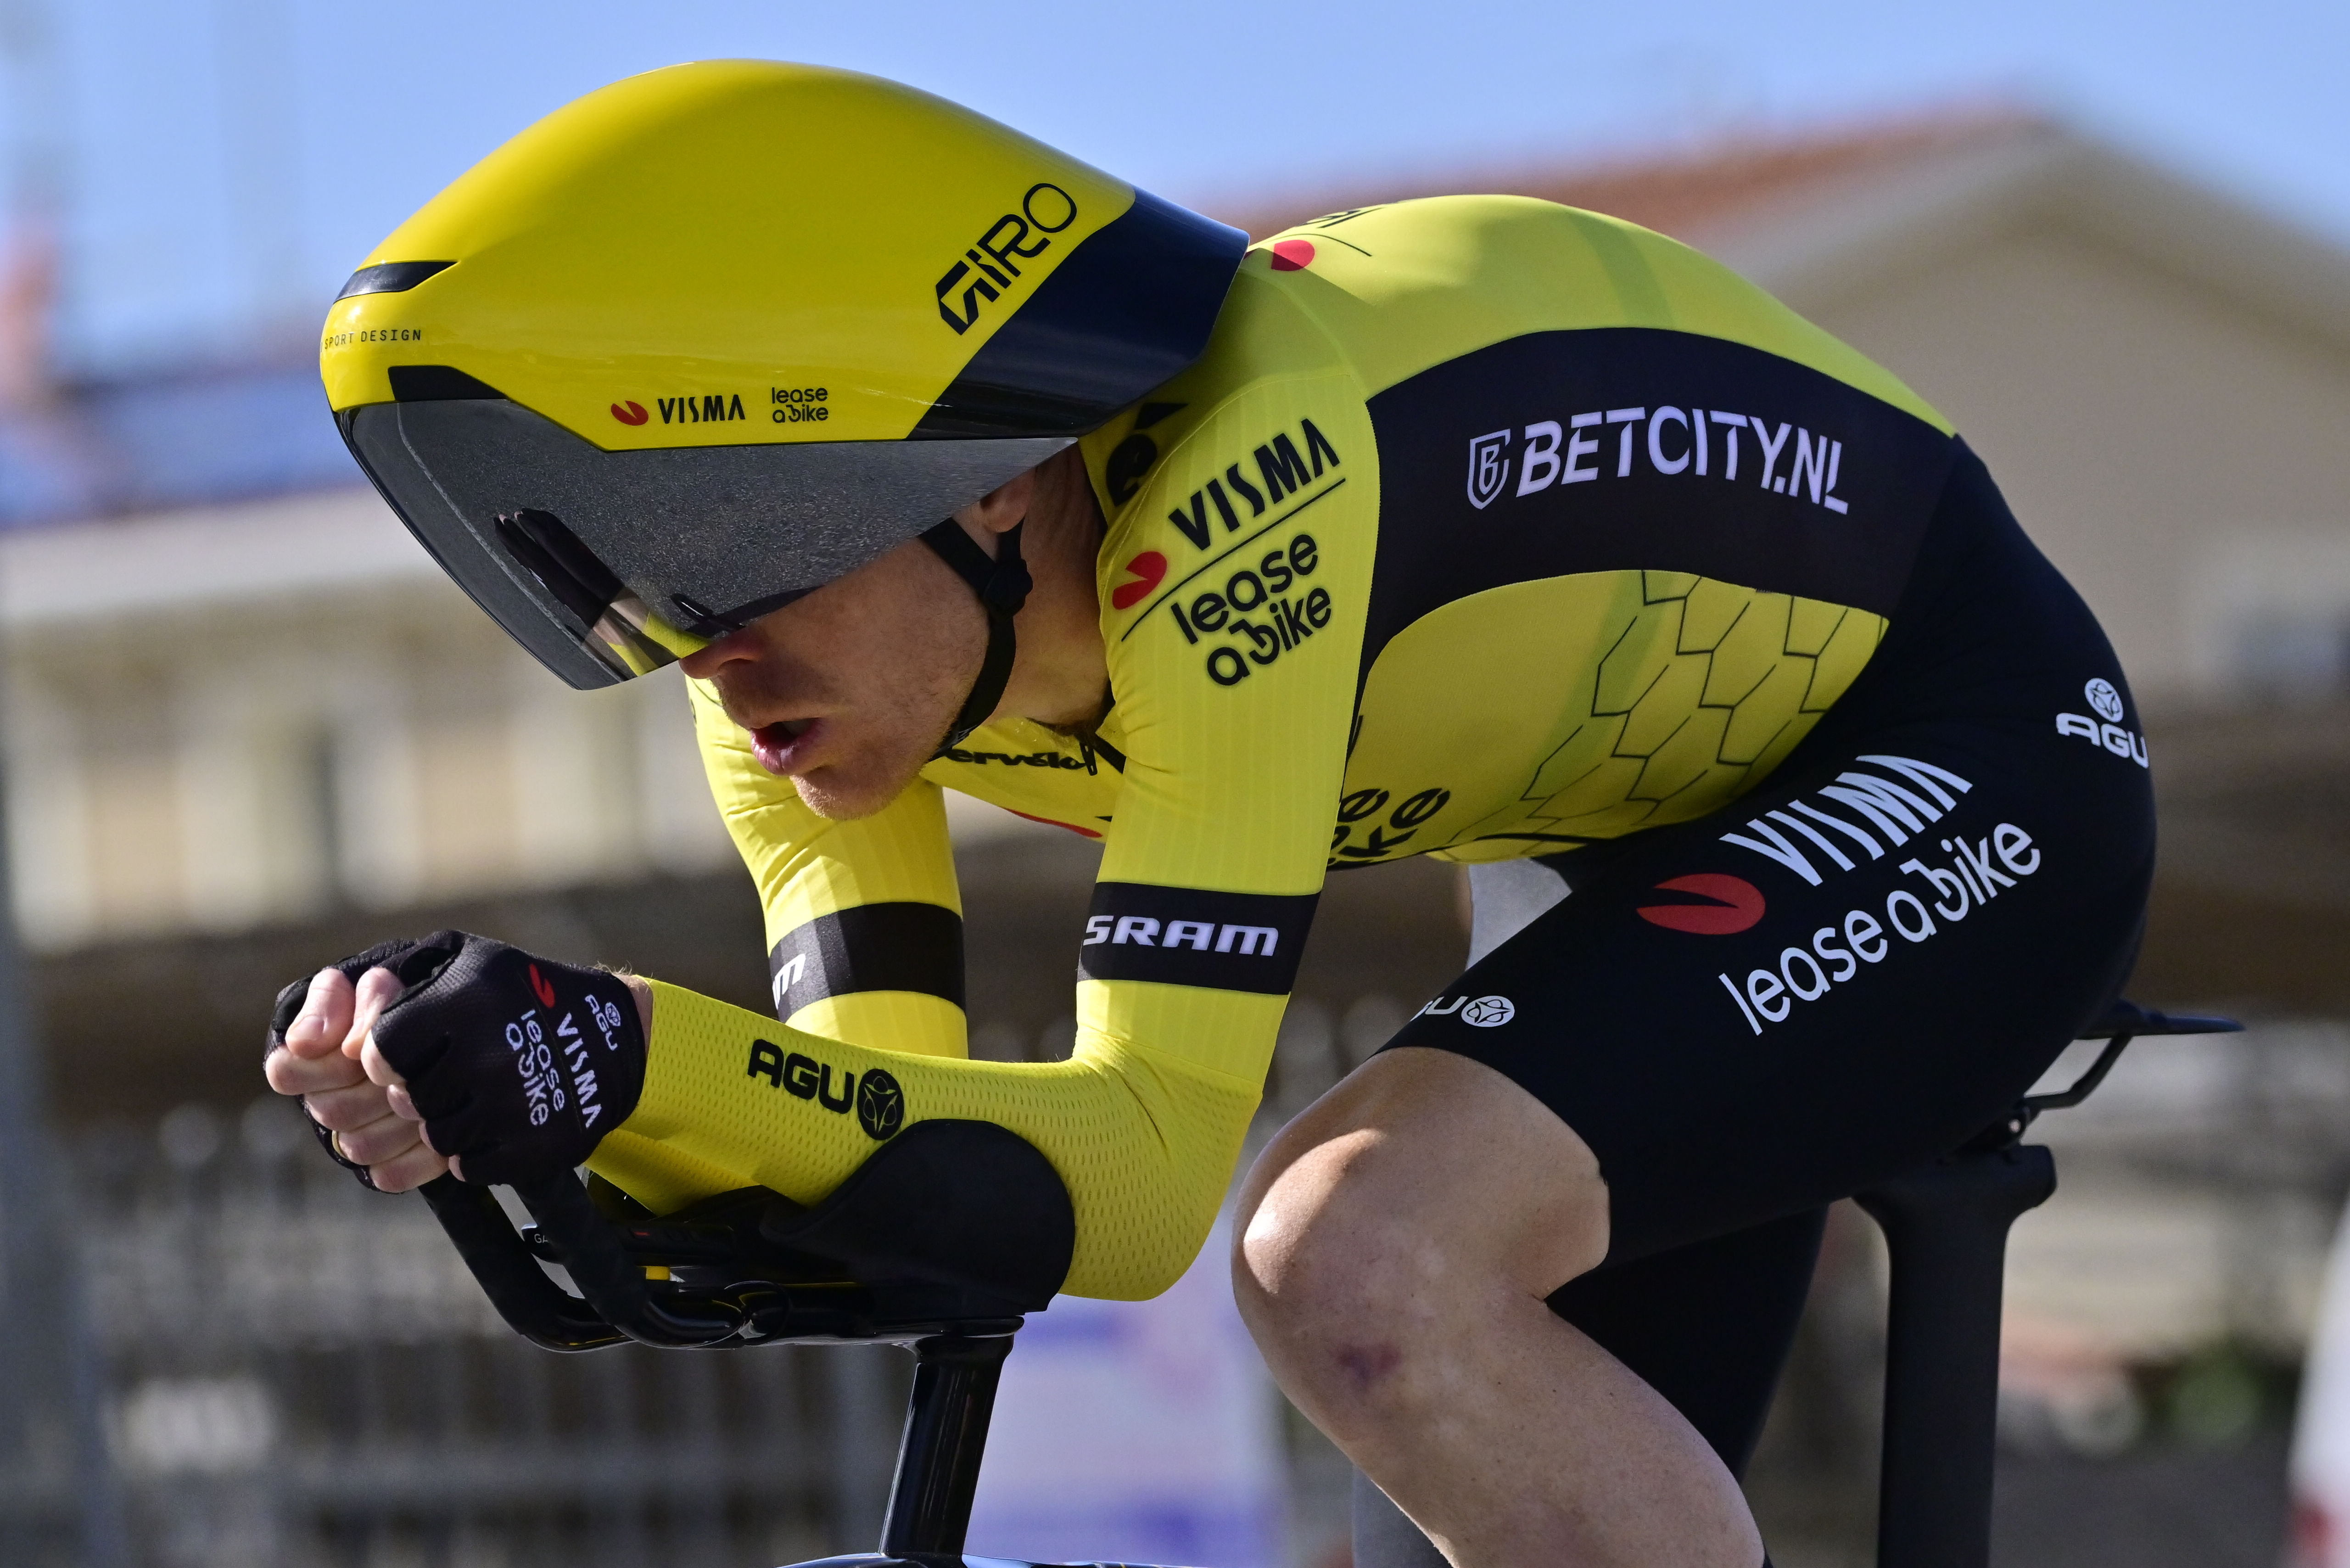 Team Visma-Lease a Bike's new time trial helmet.